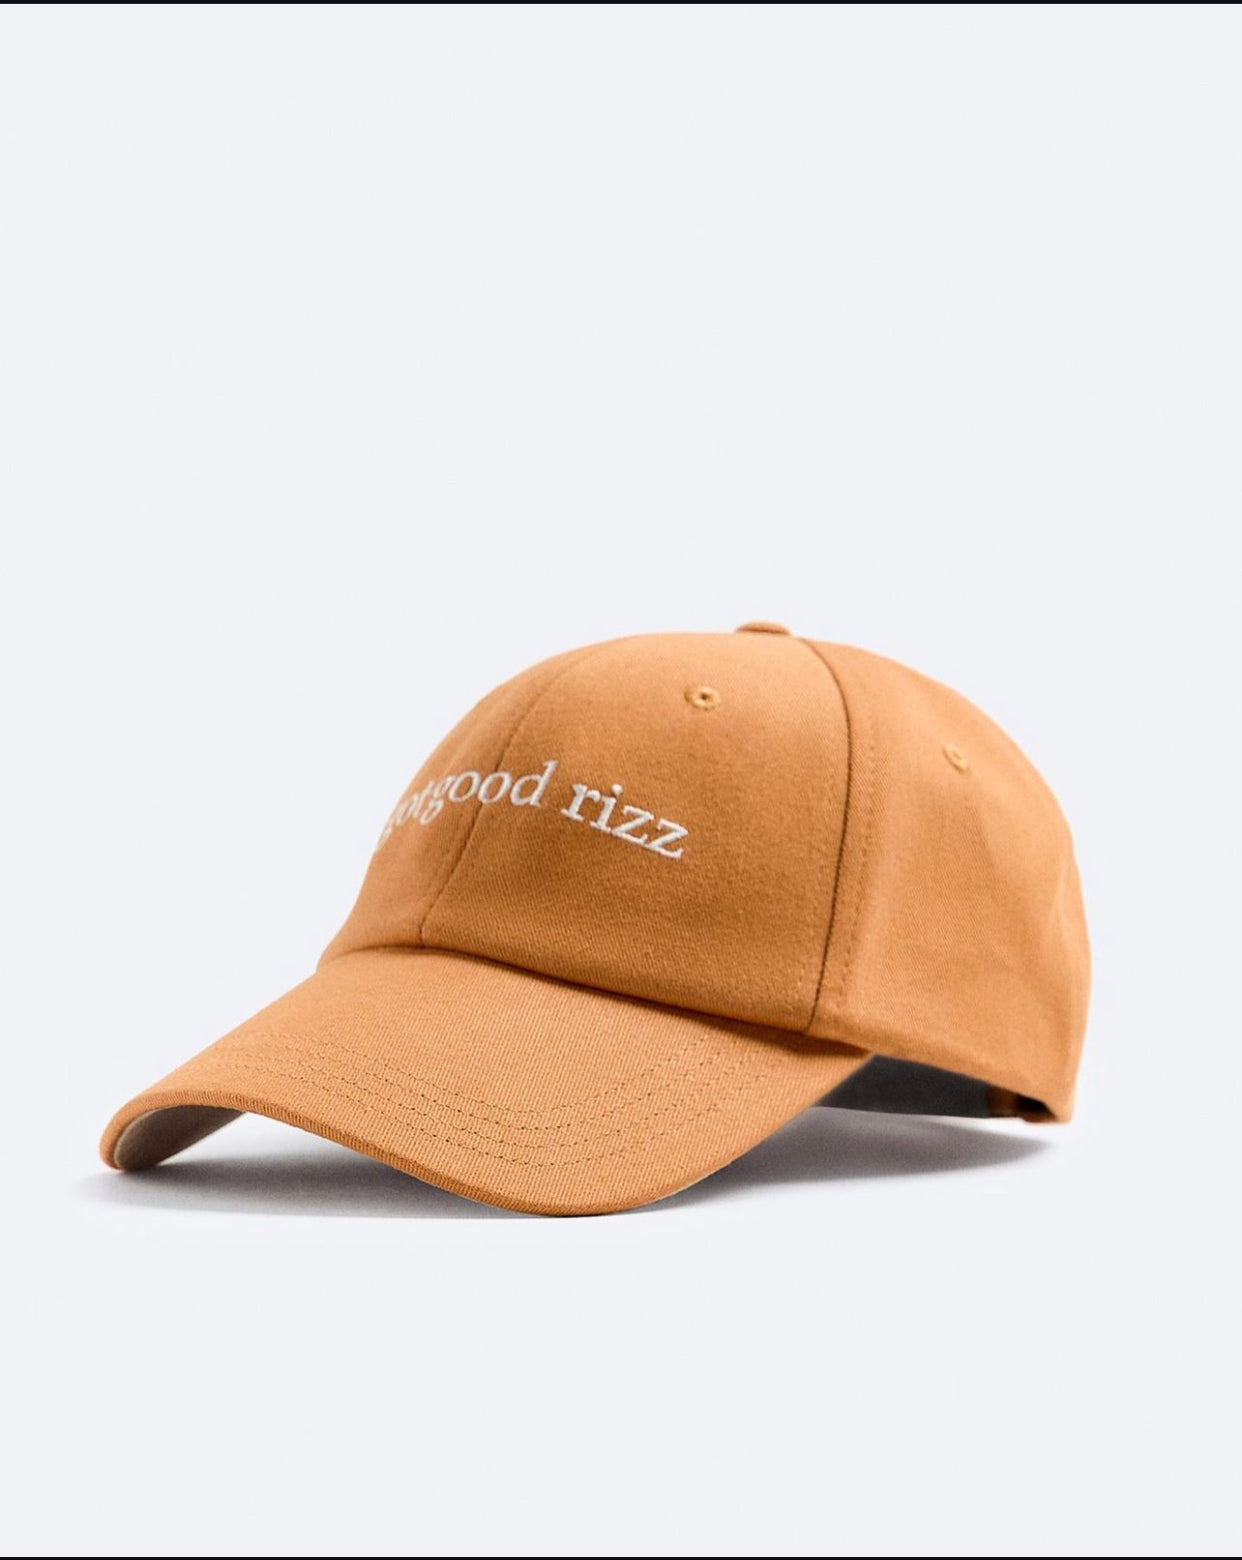 Zara embroidered cap